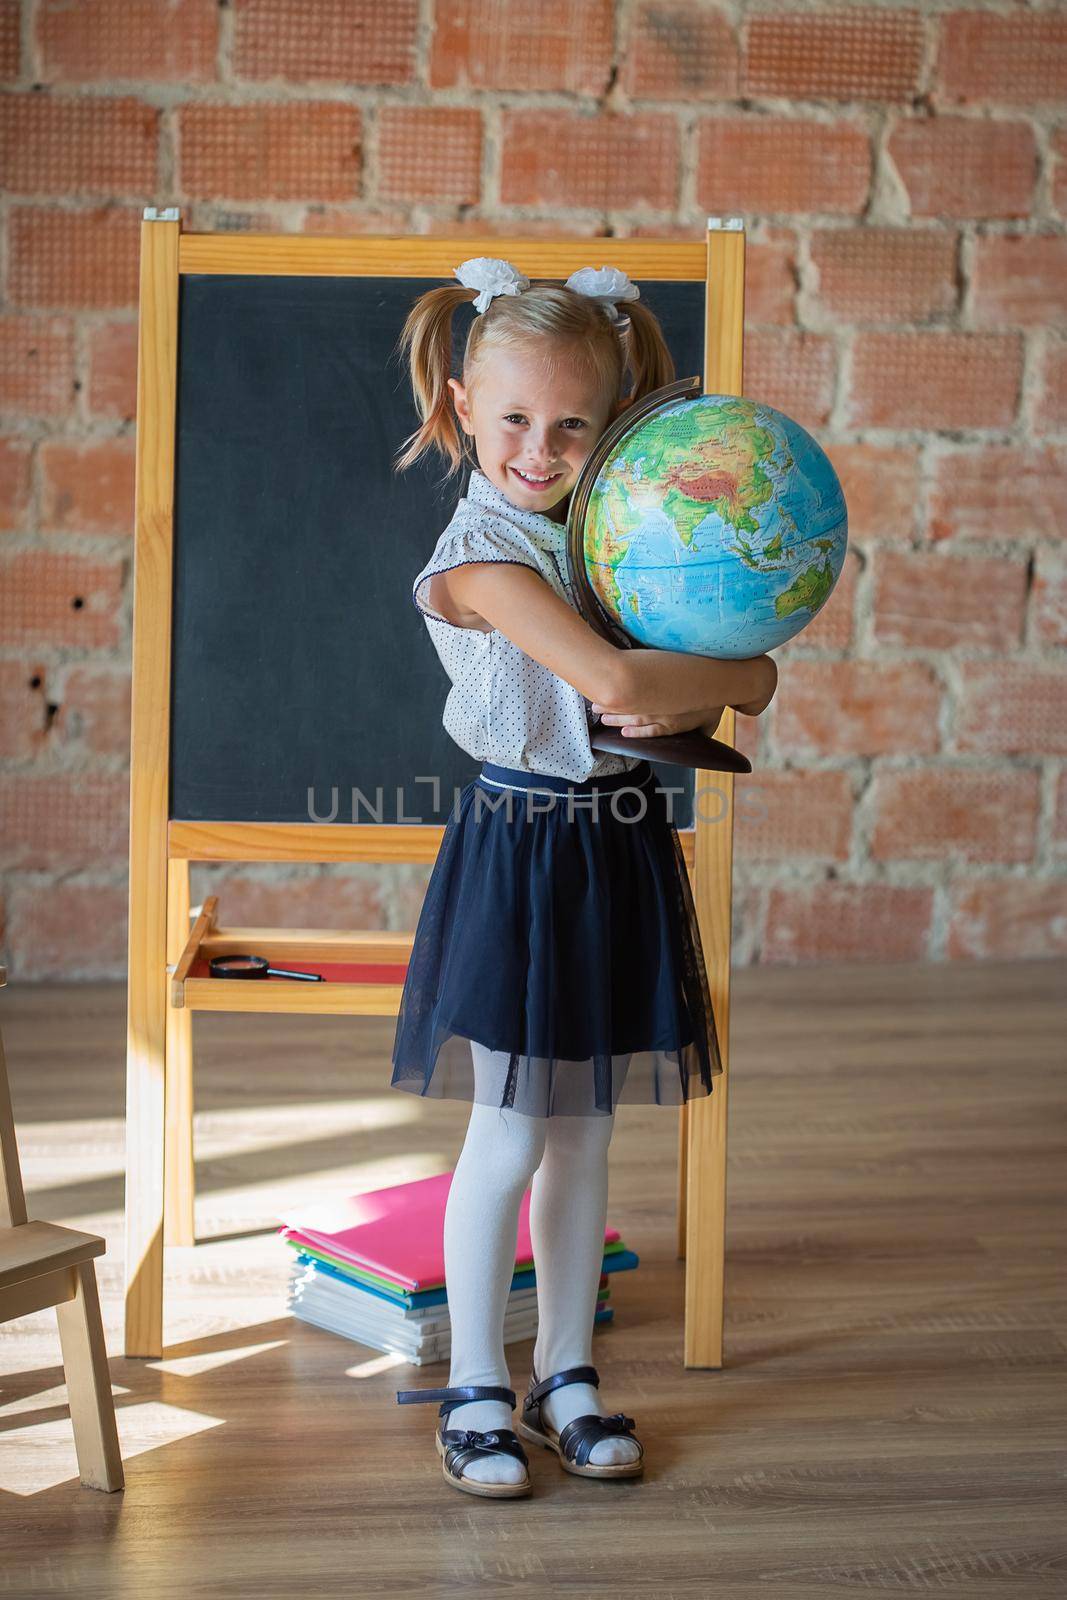 Portrait of schoolgirl standing in front of chalkboard with globe in her hands by galinasharapova